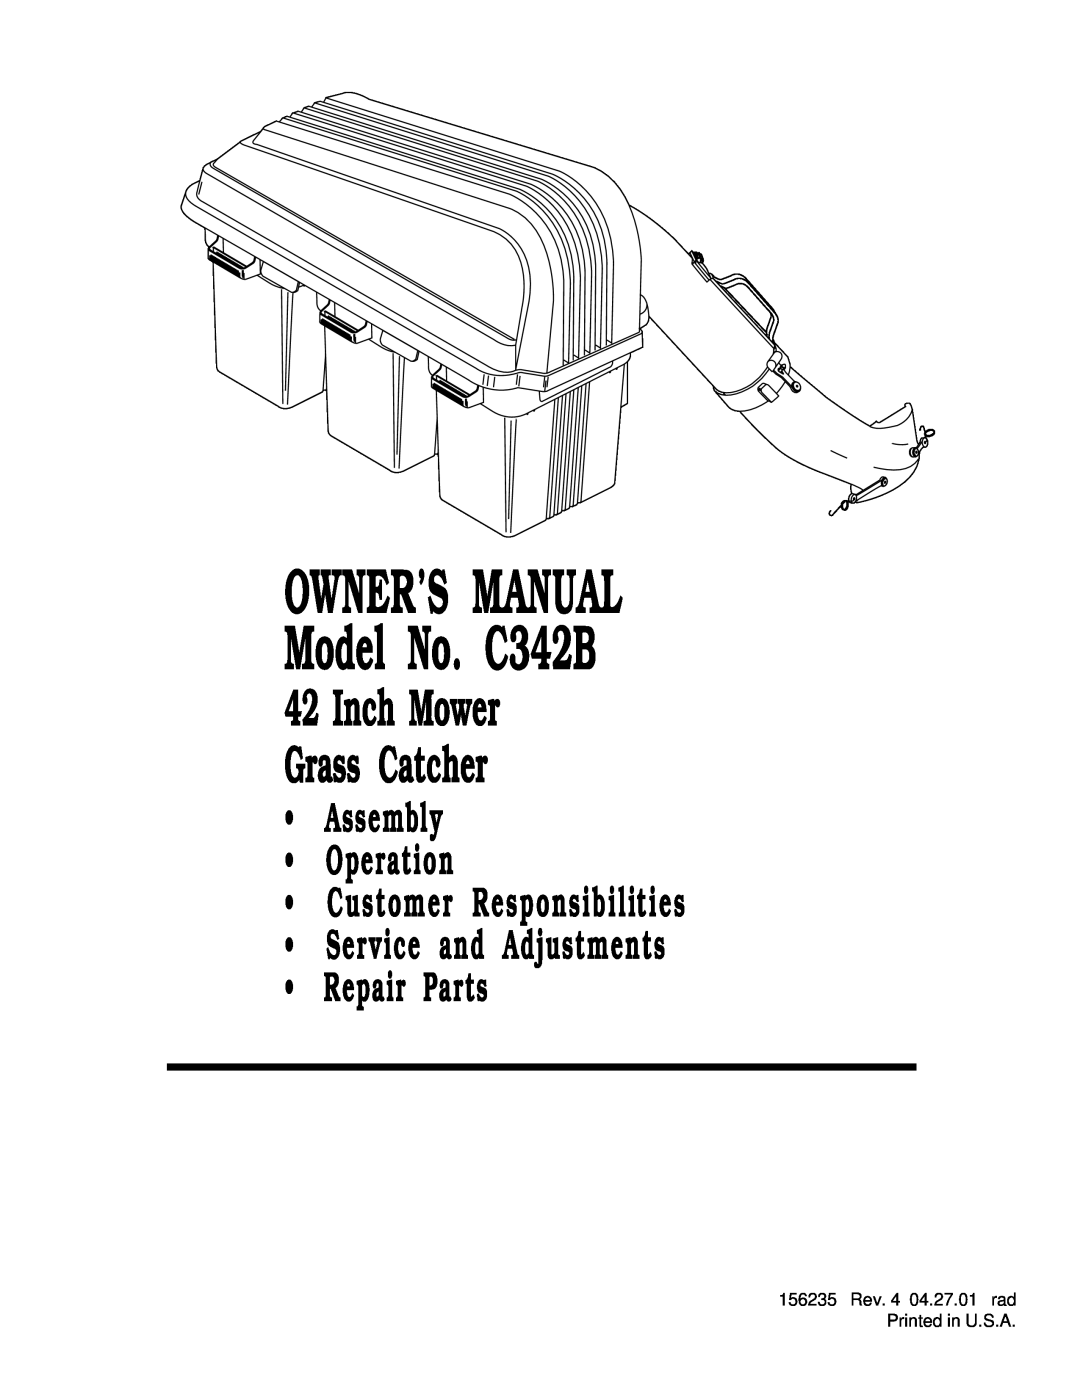 Husqvarna C342B owner manual Inch Mower Grass Catcher, Repair Parts 